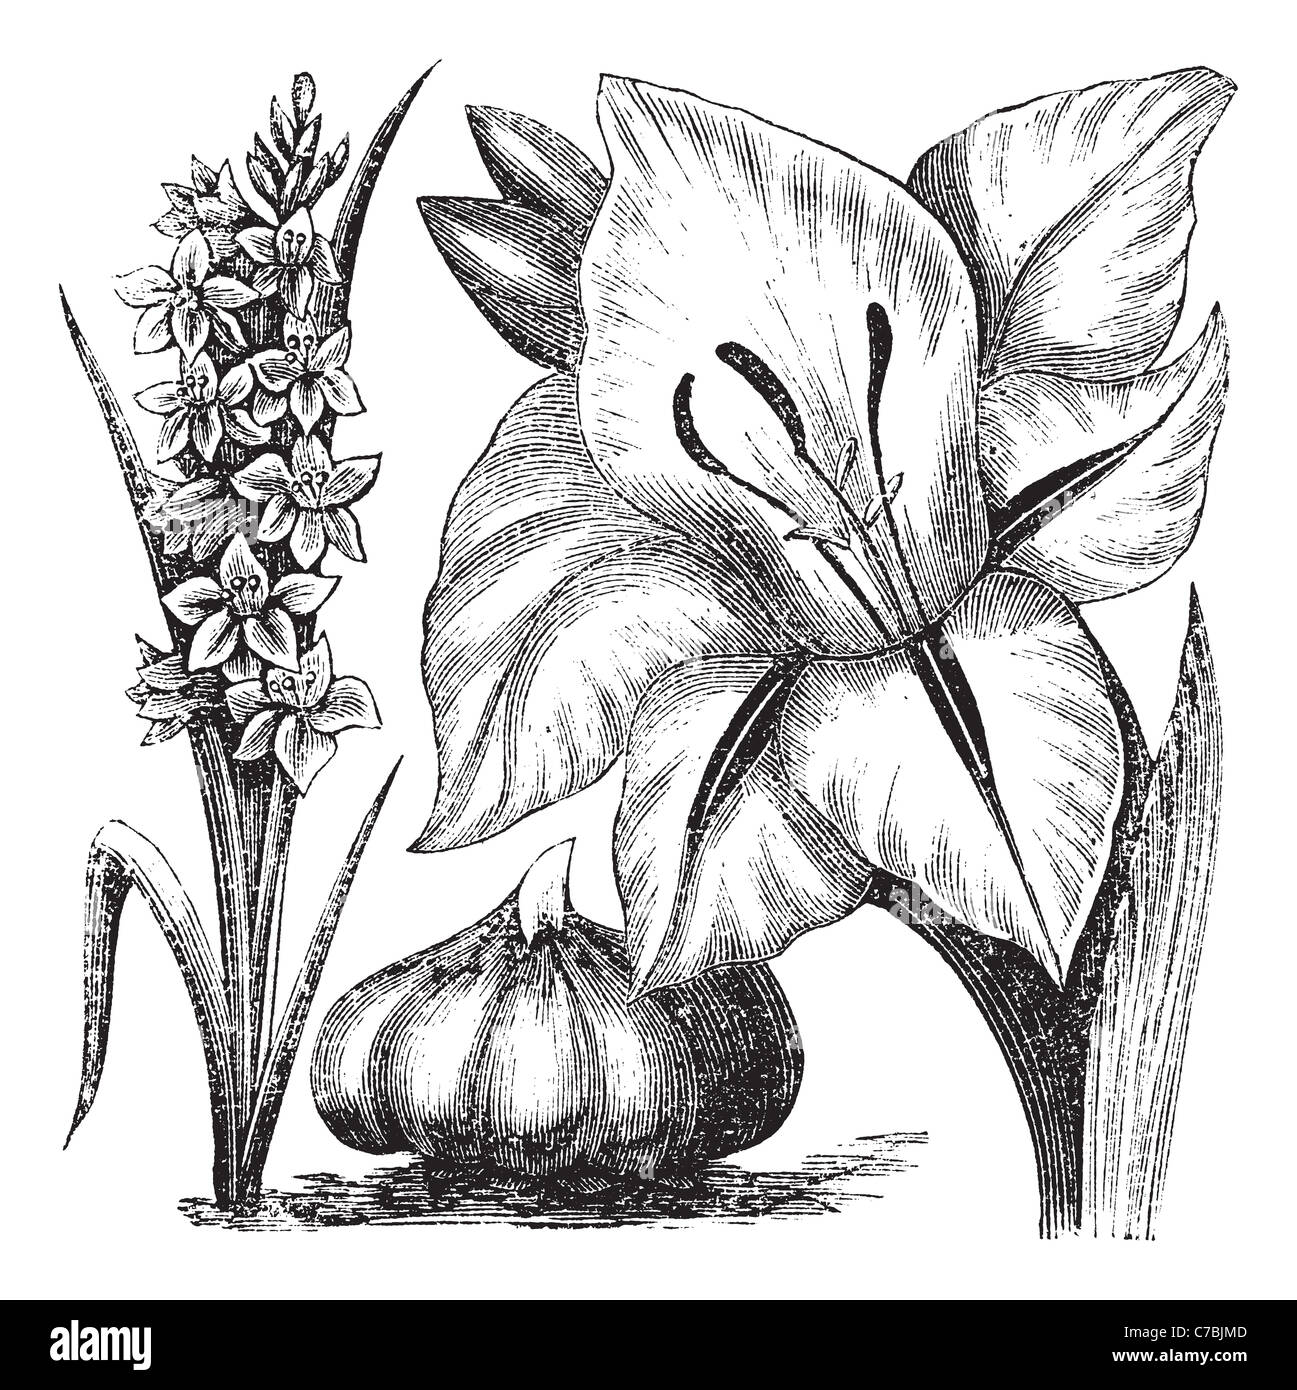 Gladiolus or sword lily, vintage engraving. Old engraved illustration of Gladiolus with Gladiolus communis. Stock Photo